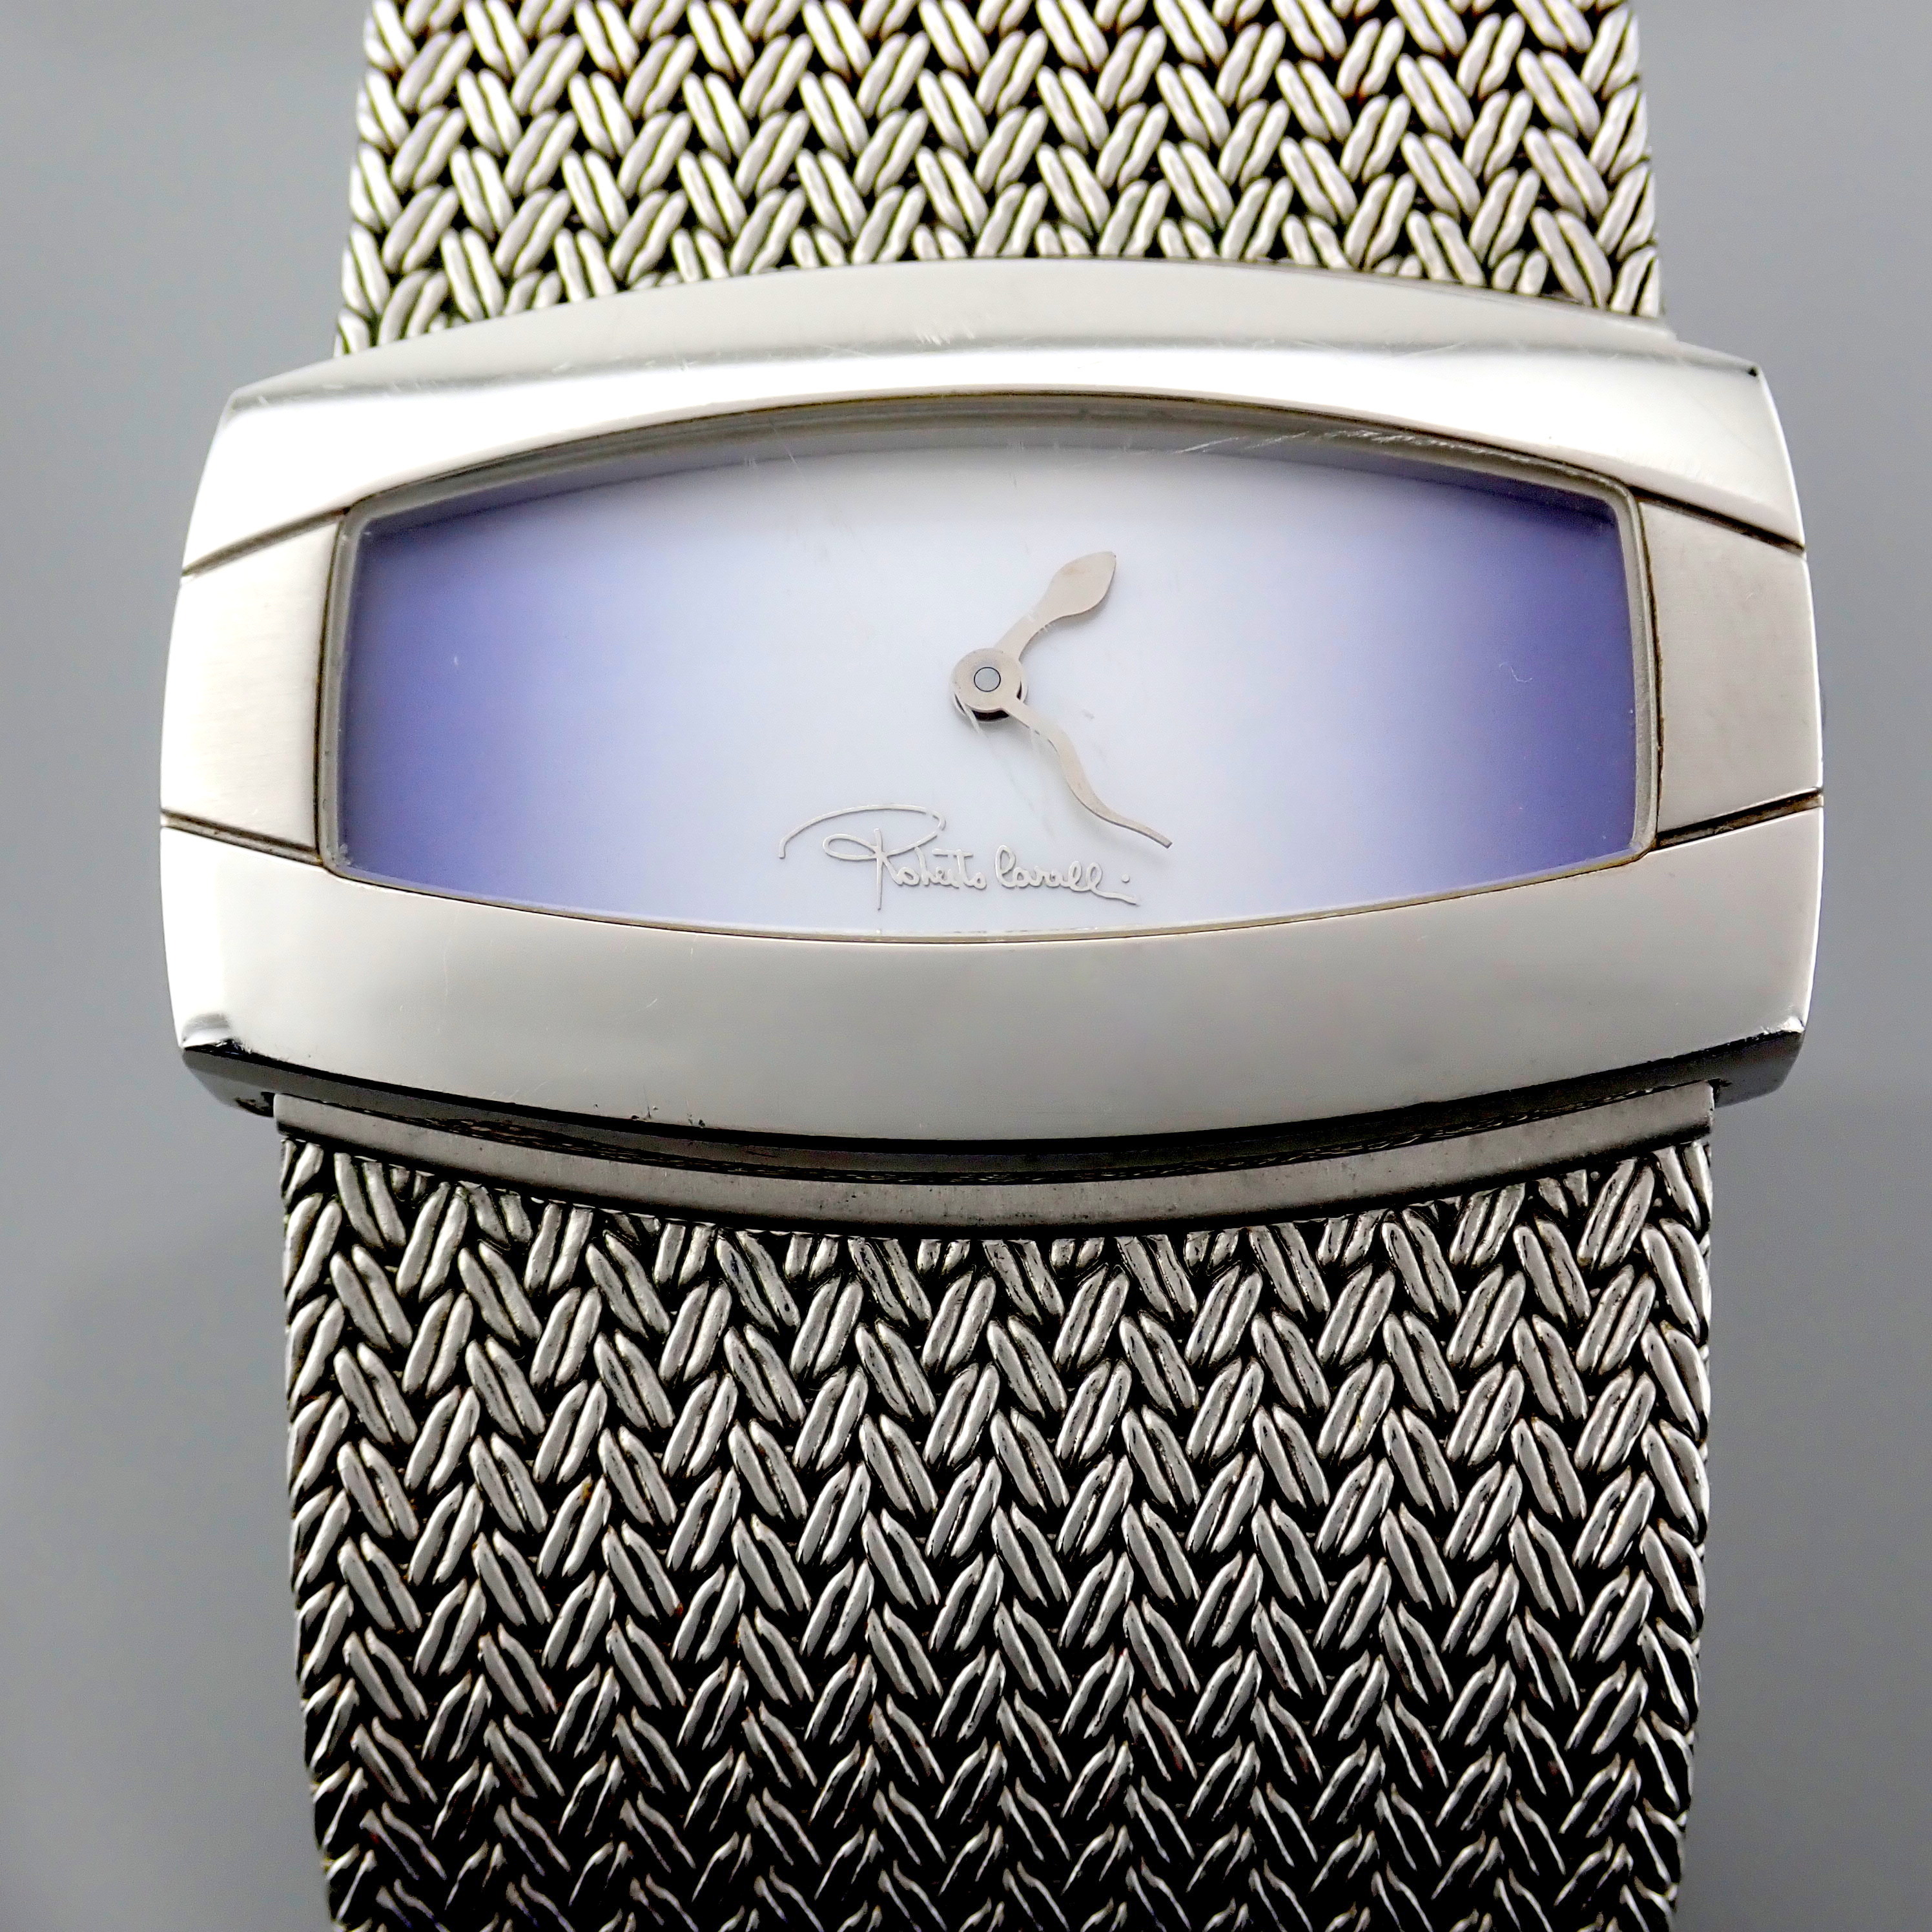 Roberto Cavalli - Lady's Steel Wrist Watch - Image 8 of 10